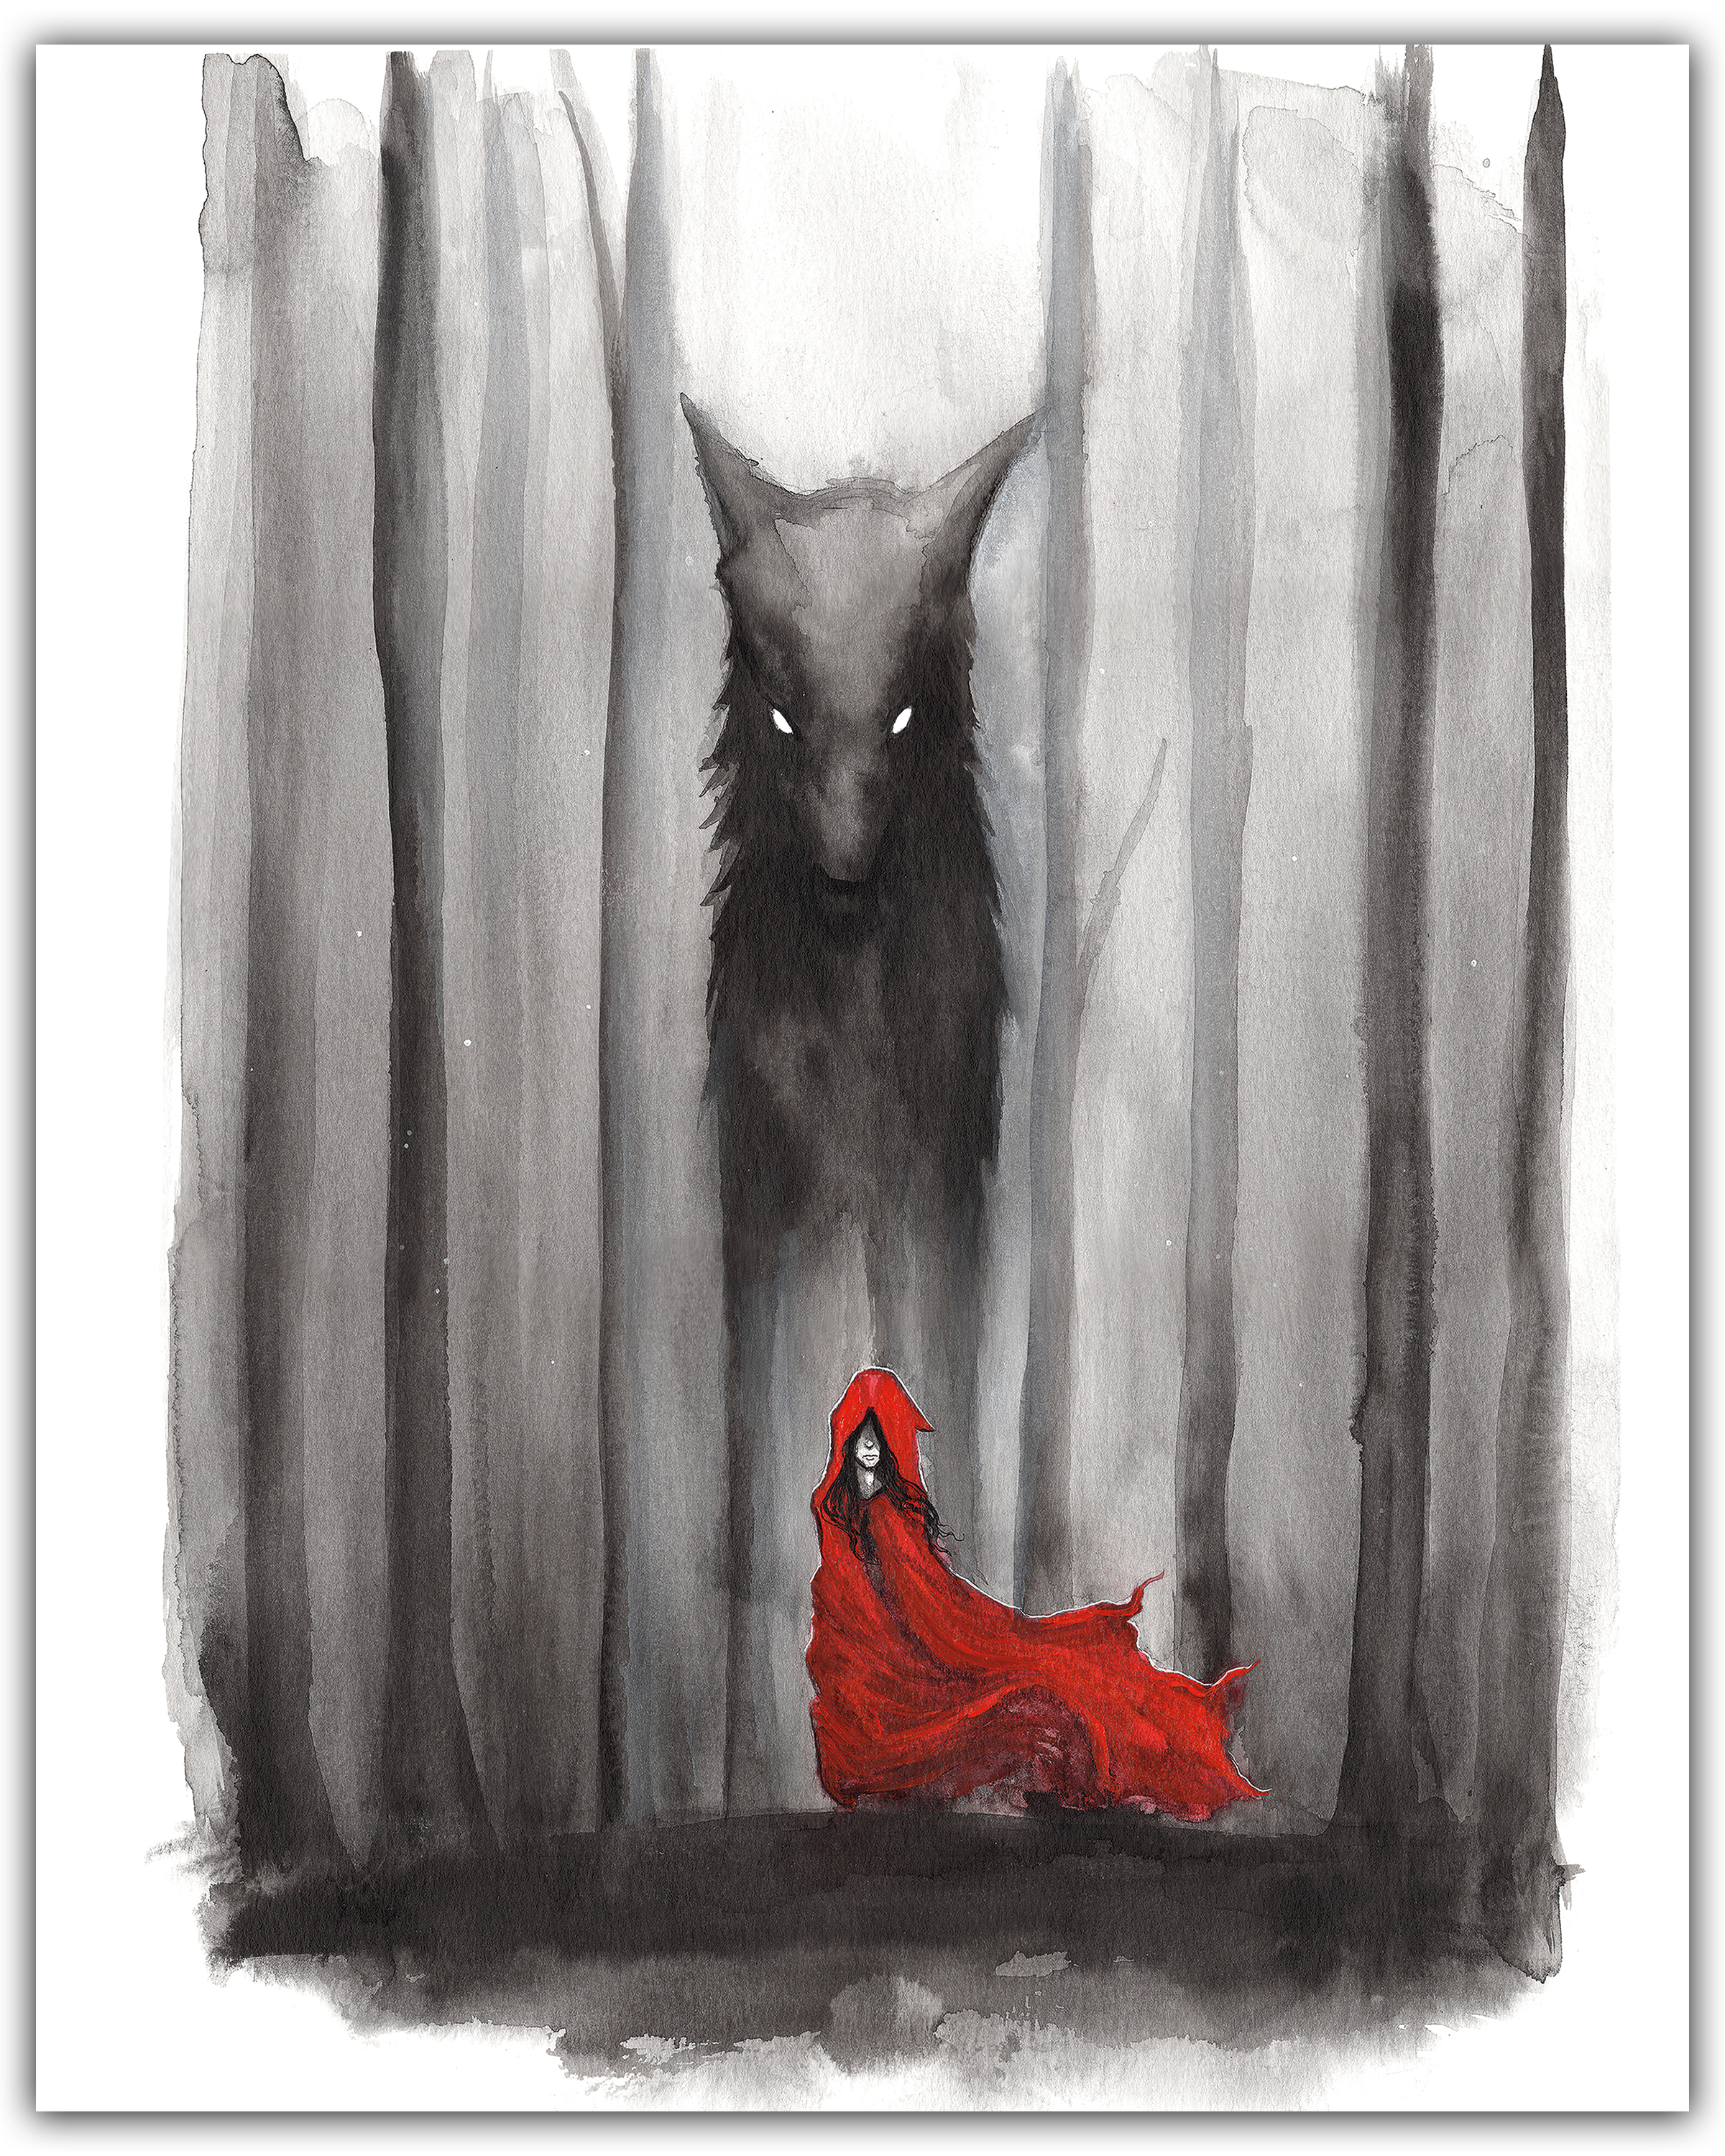 Red Riding Hood Print (New)